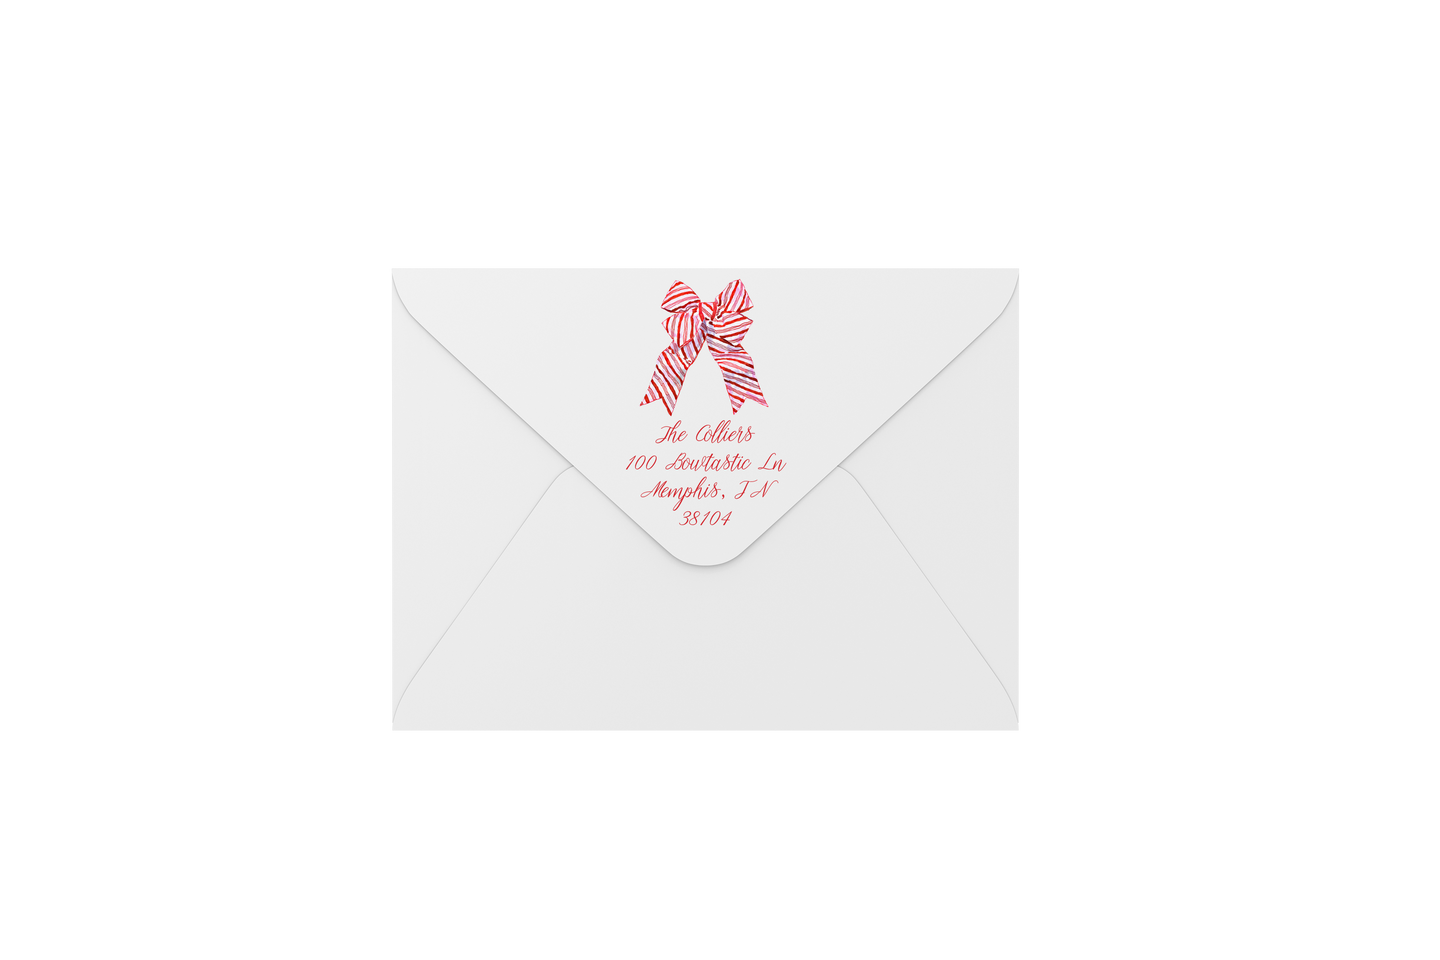 bow striped envelopes - address printing